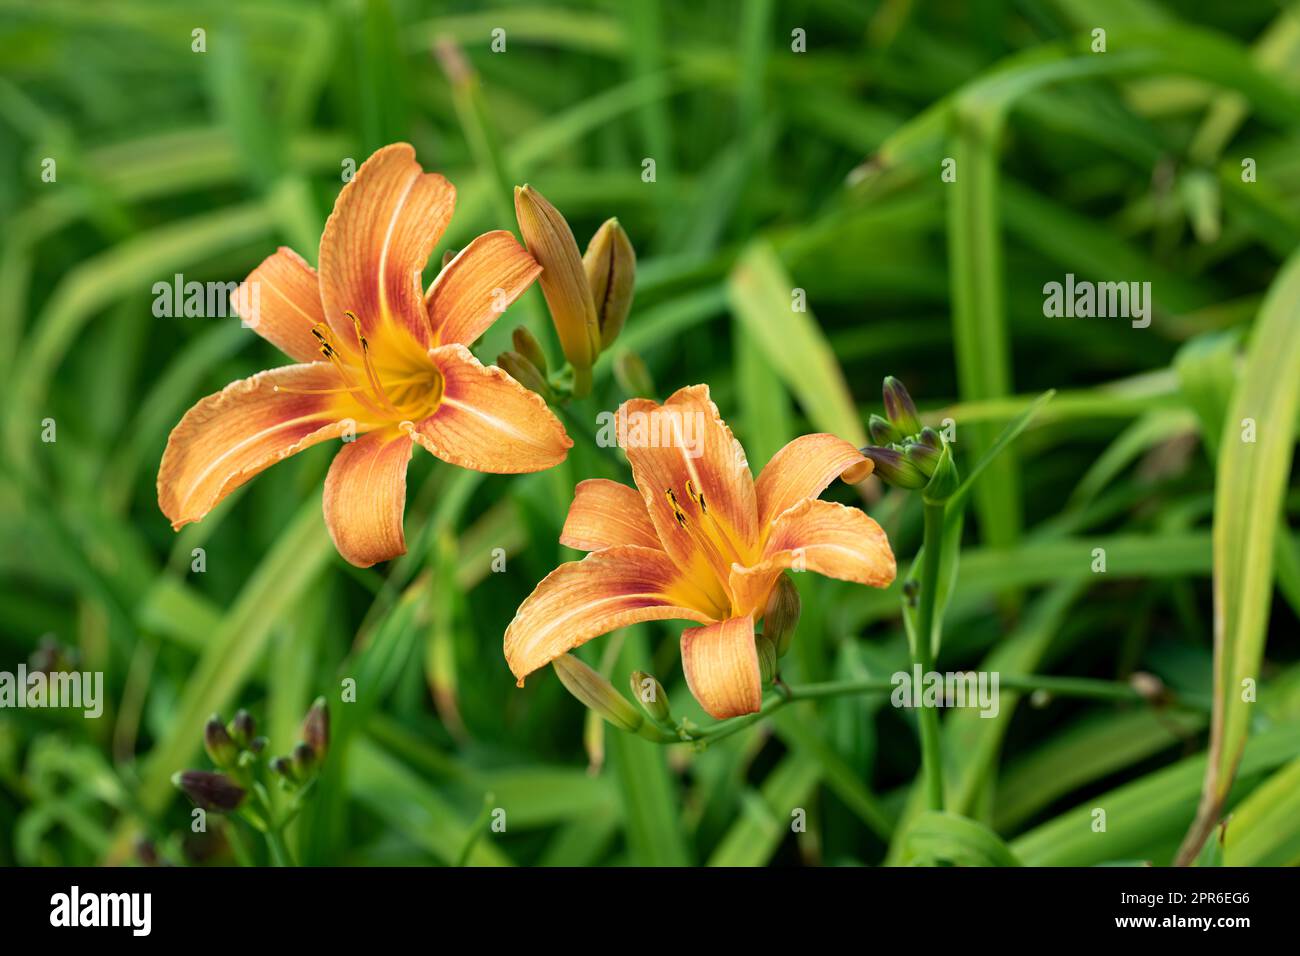 Orange Hemerocallis flowers in a garden Stock Photo